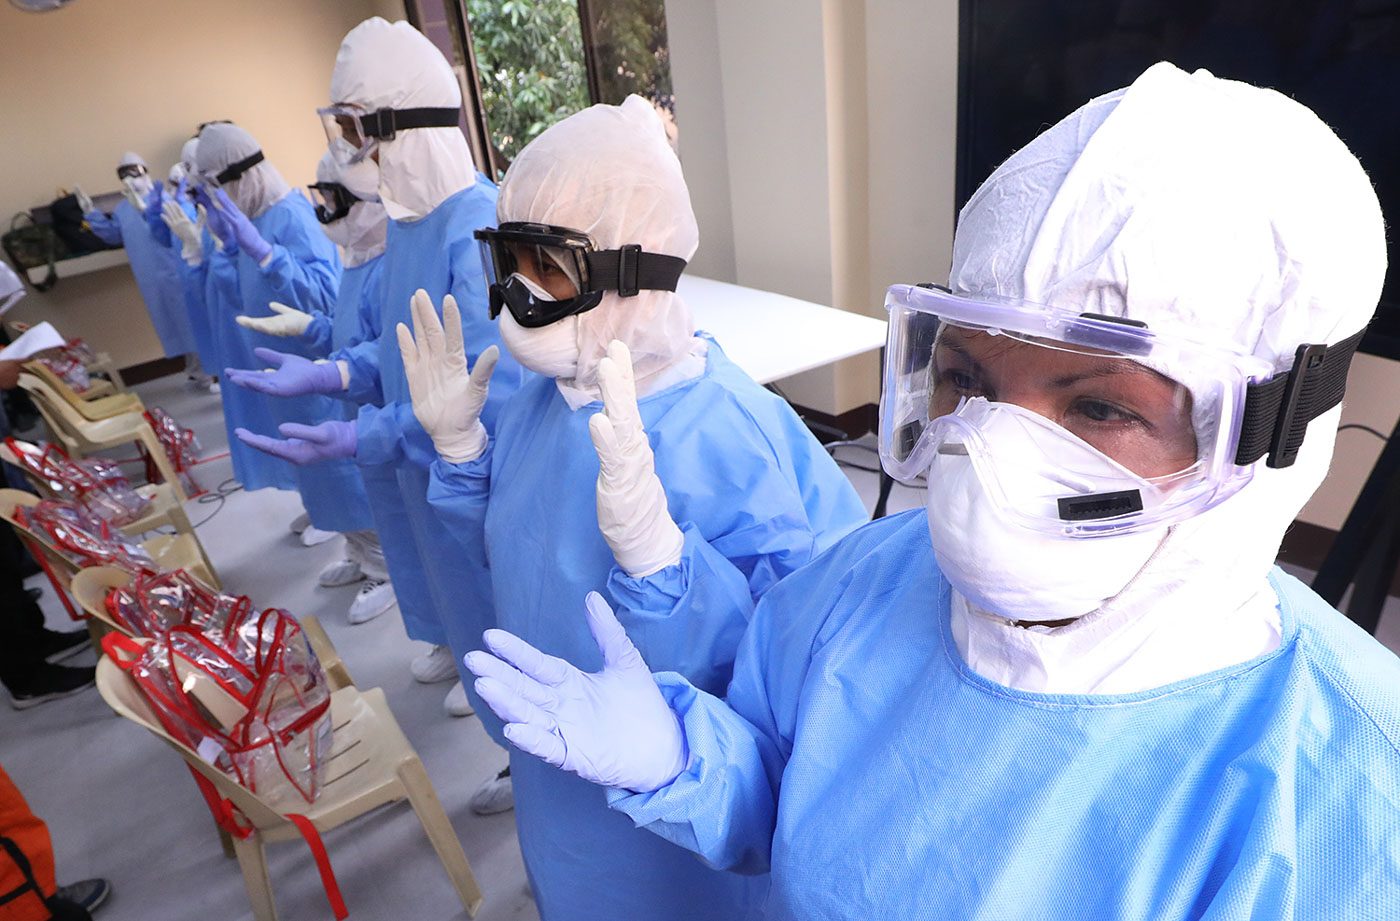 DOH assures hospitals of PPEs for coronavirus response